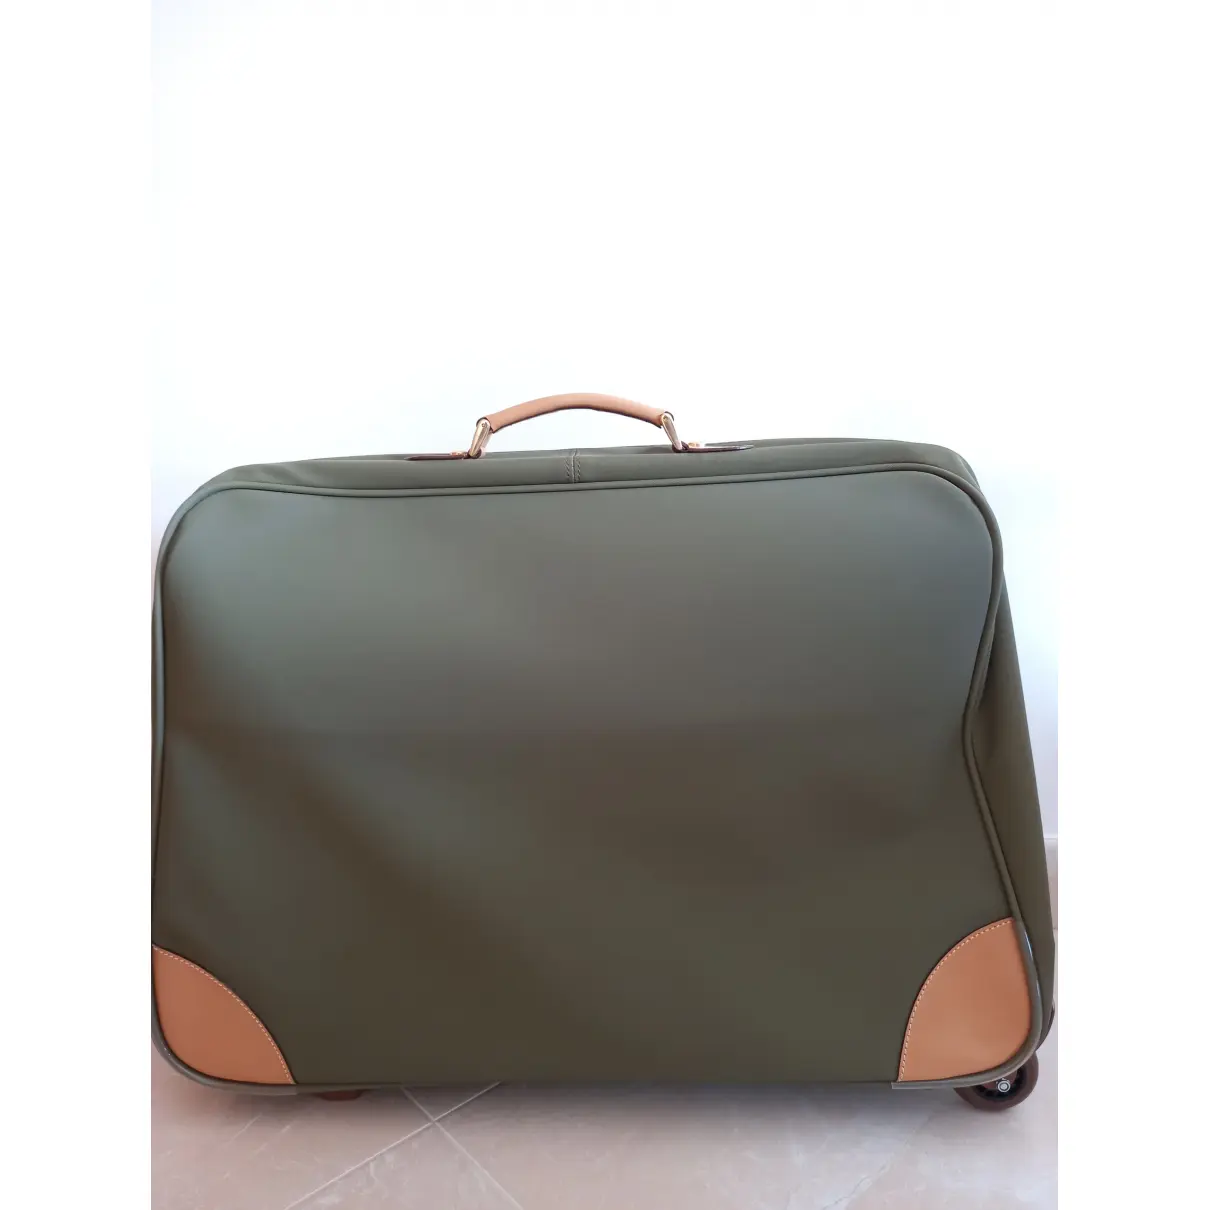 Buy Bric's Travel bag online